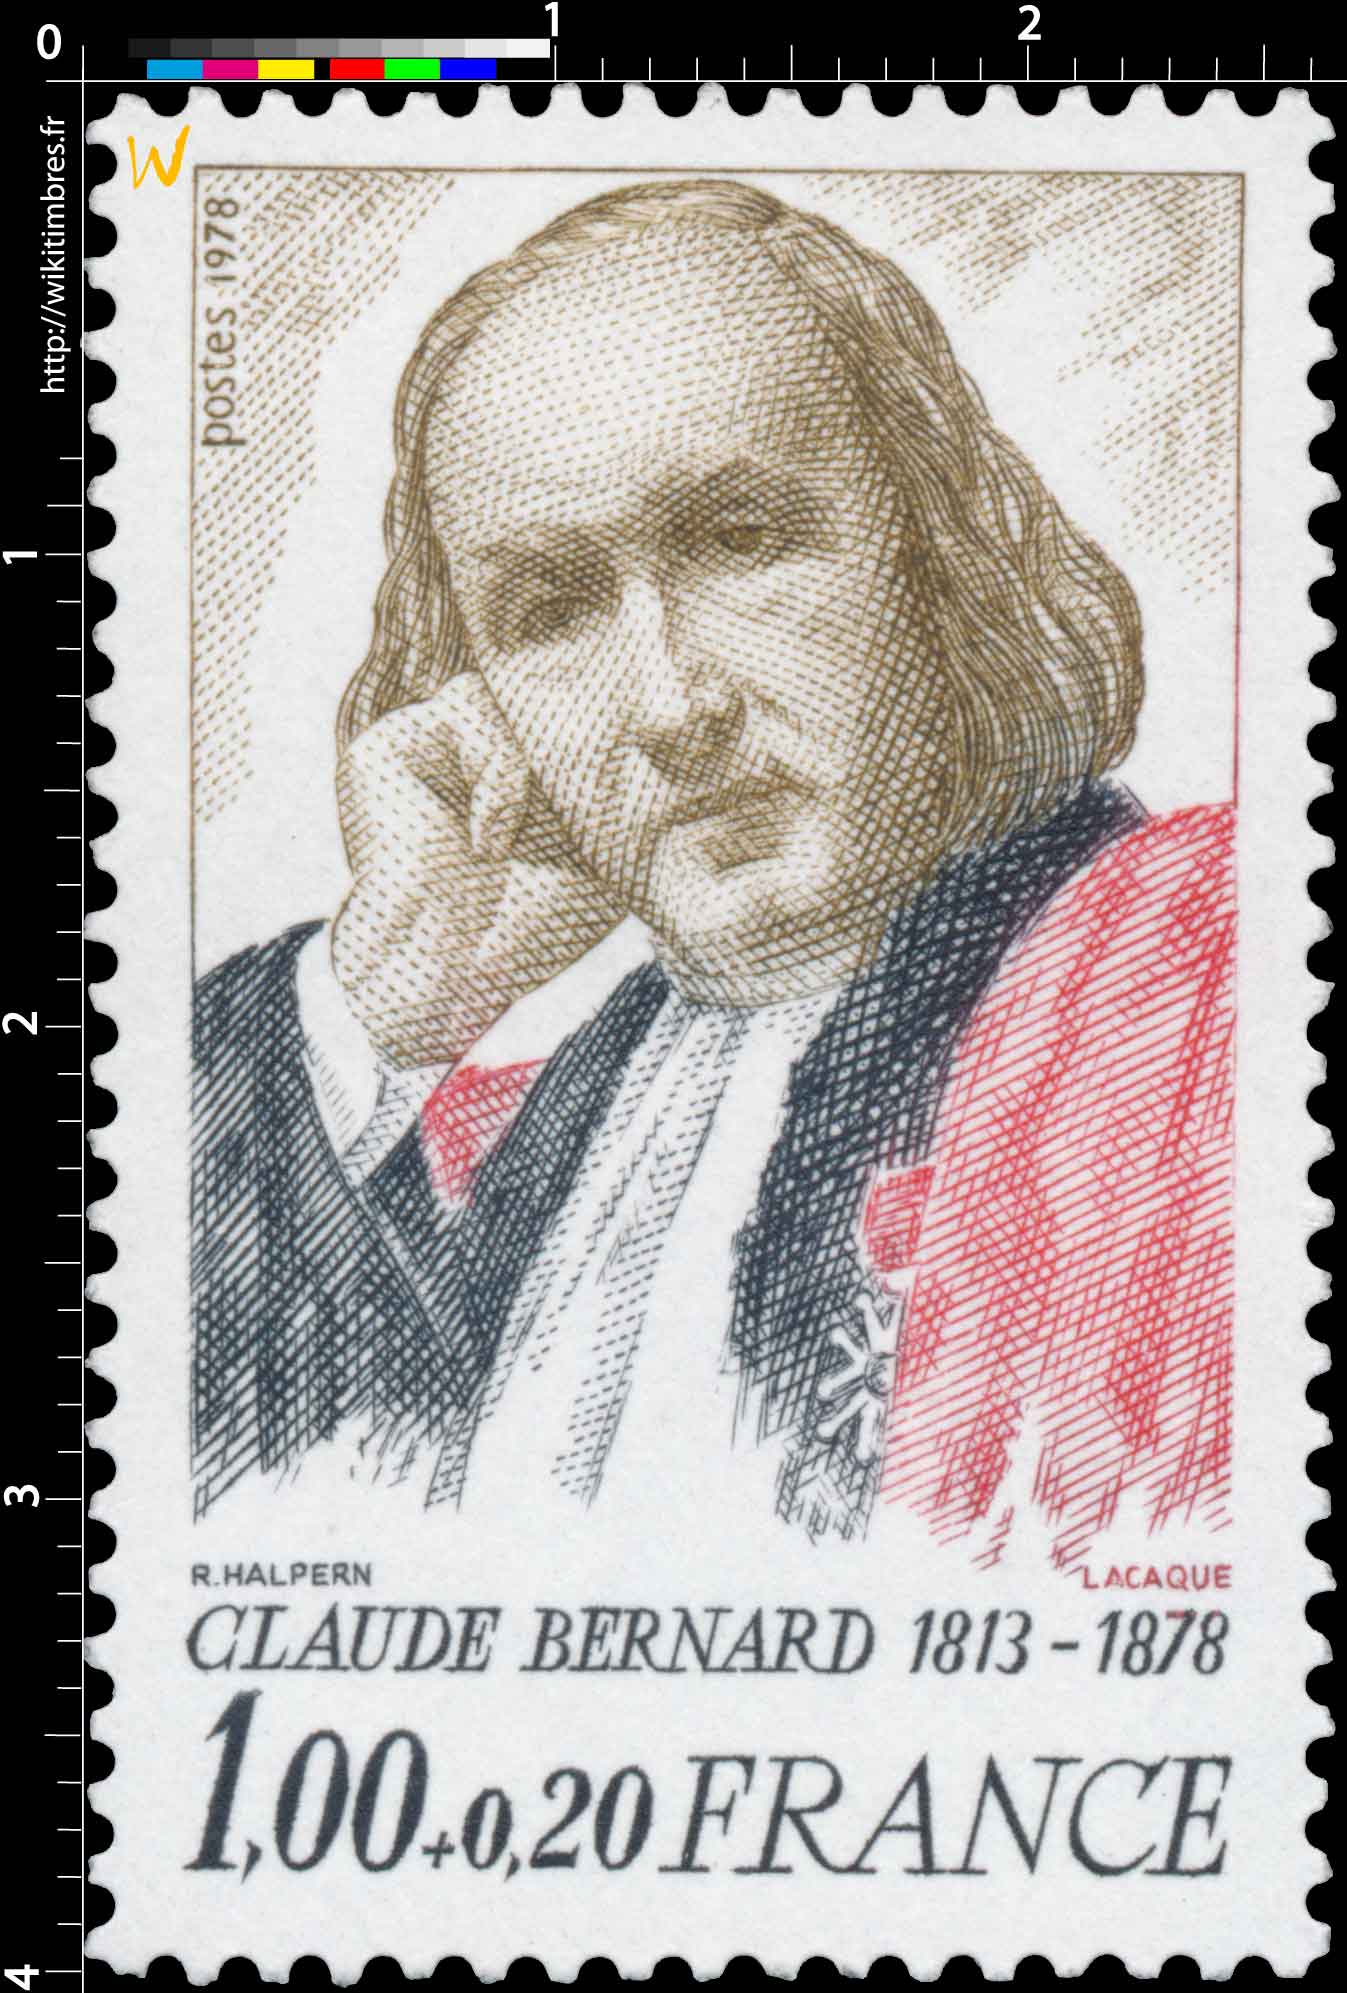 1978 CLAUDE BERNARD 1813-1878